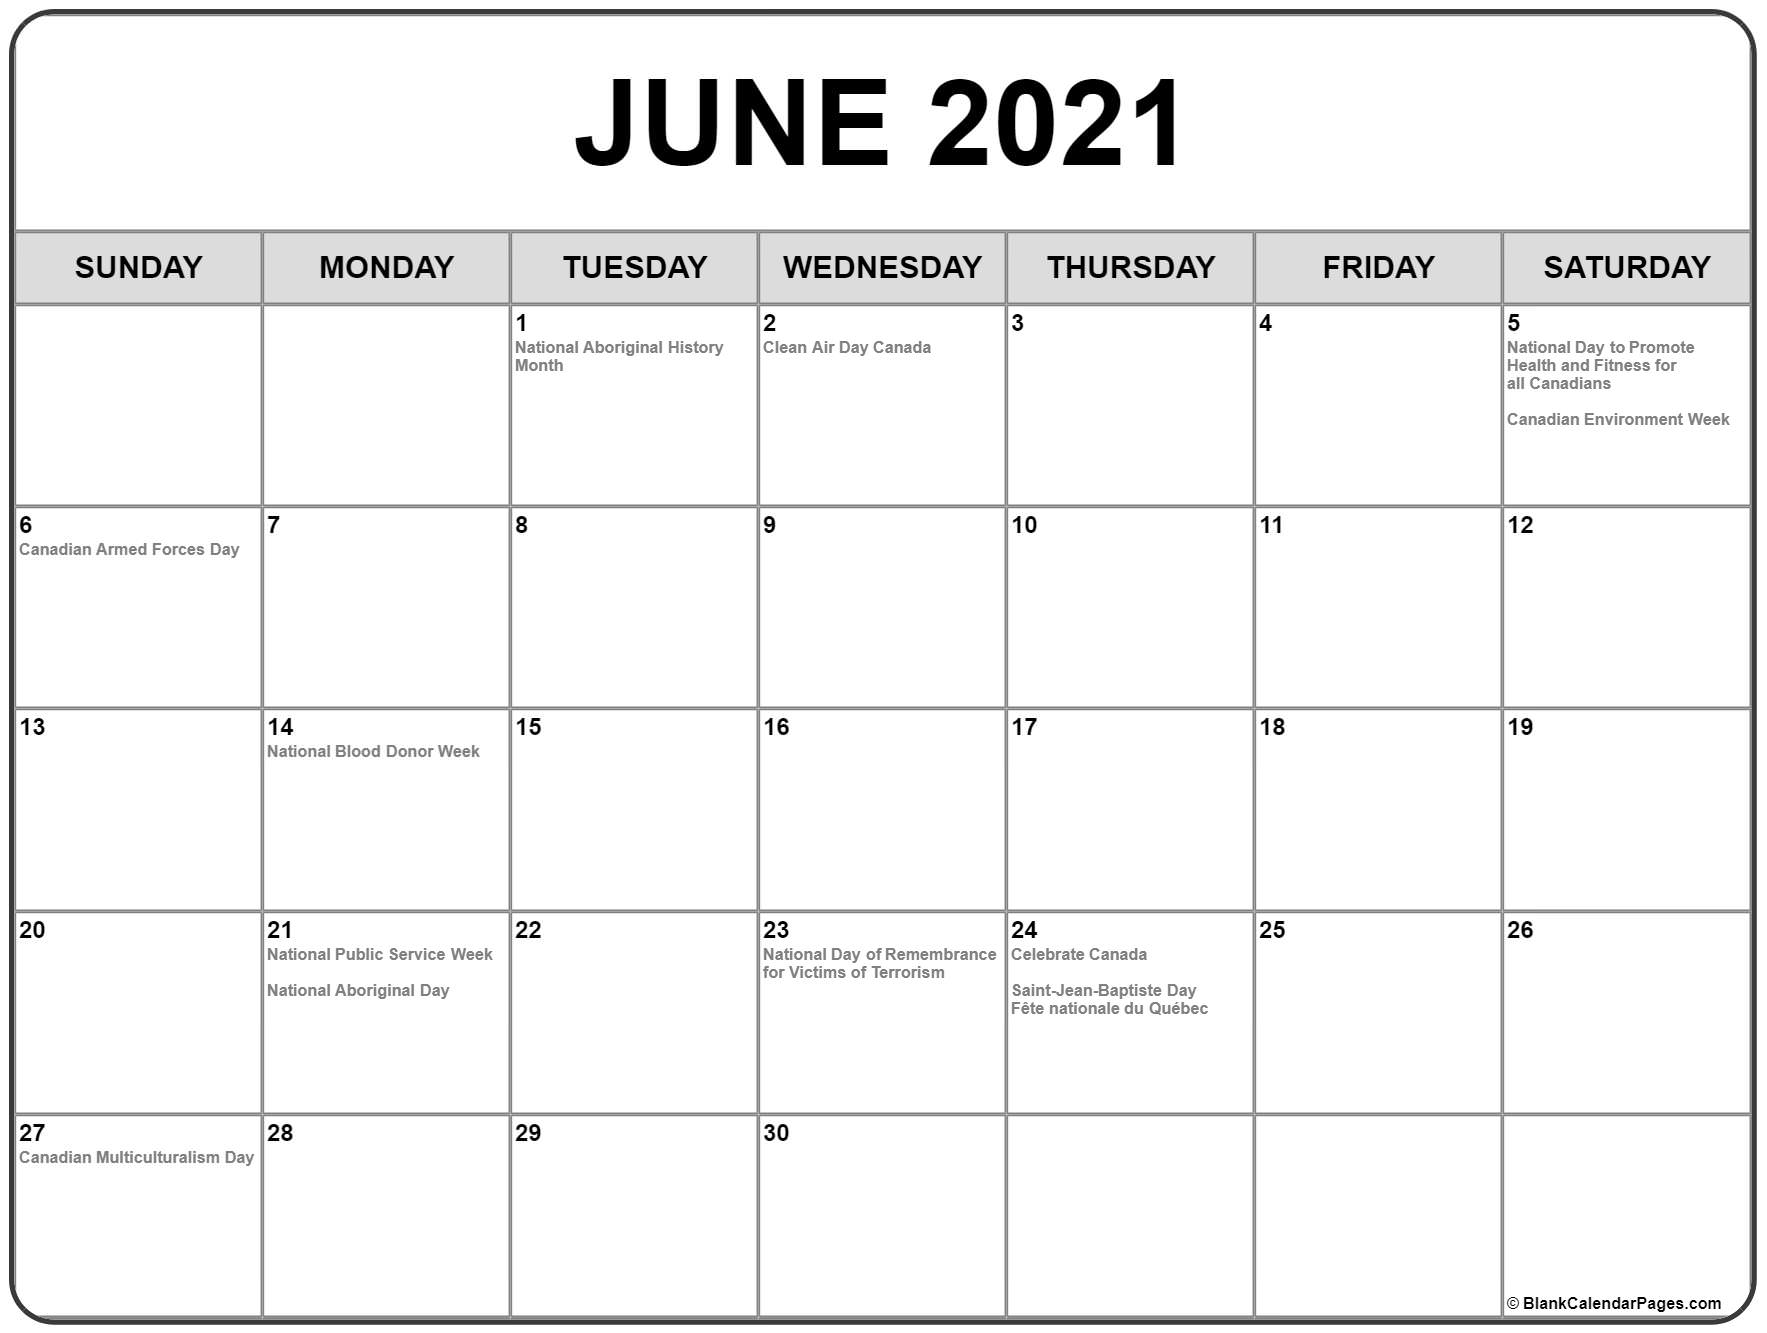 June 2021 calendar with holidays